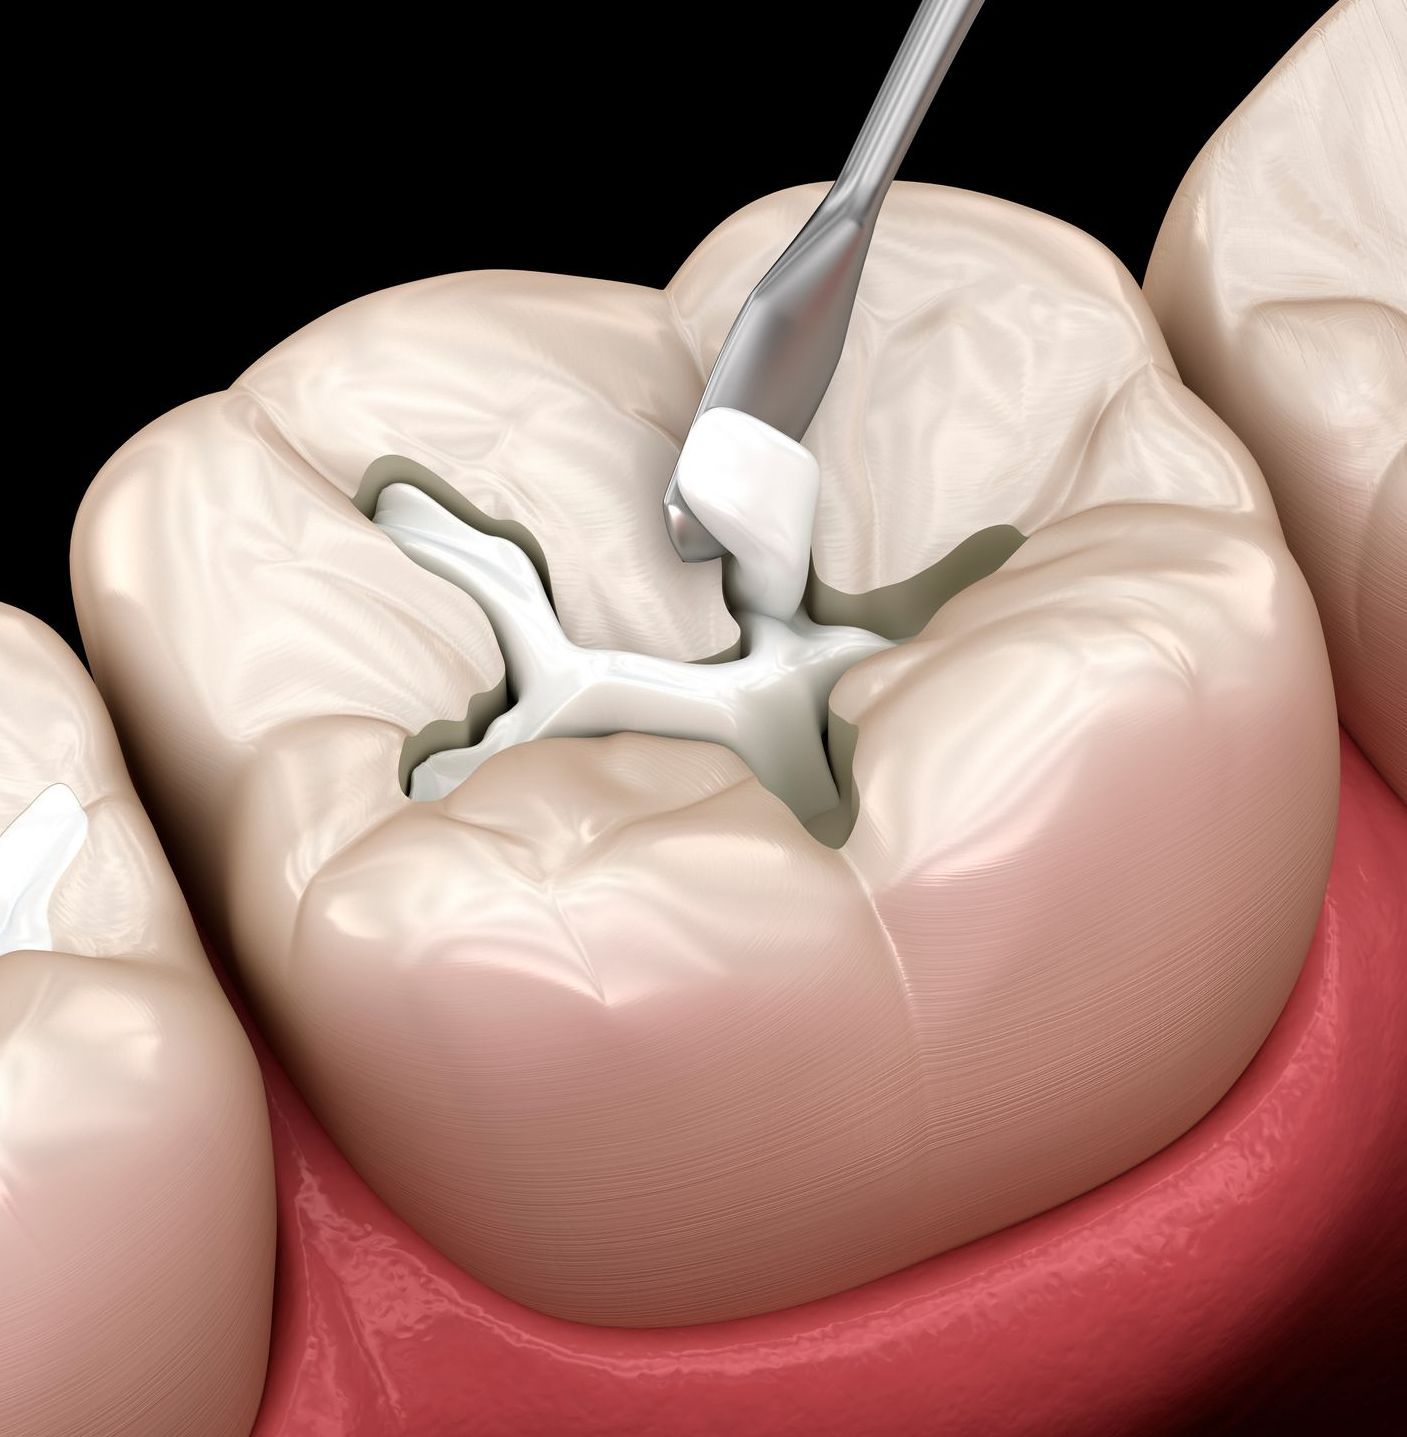 Close-up view of dental cavitation